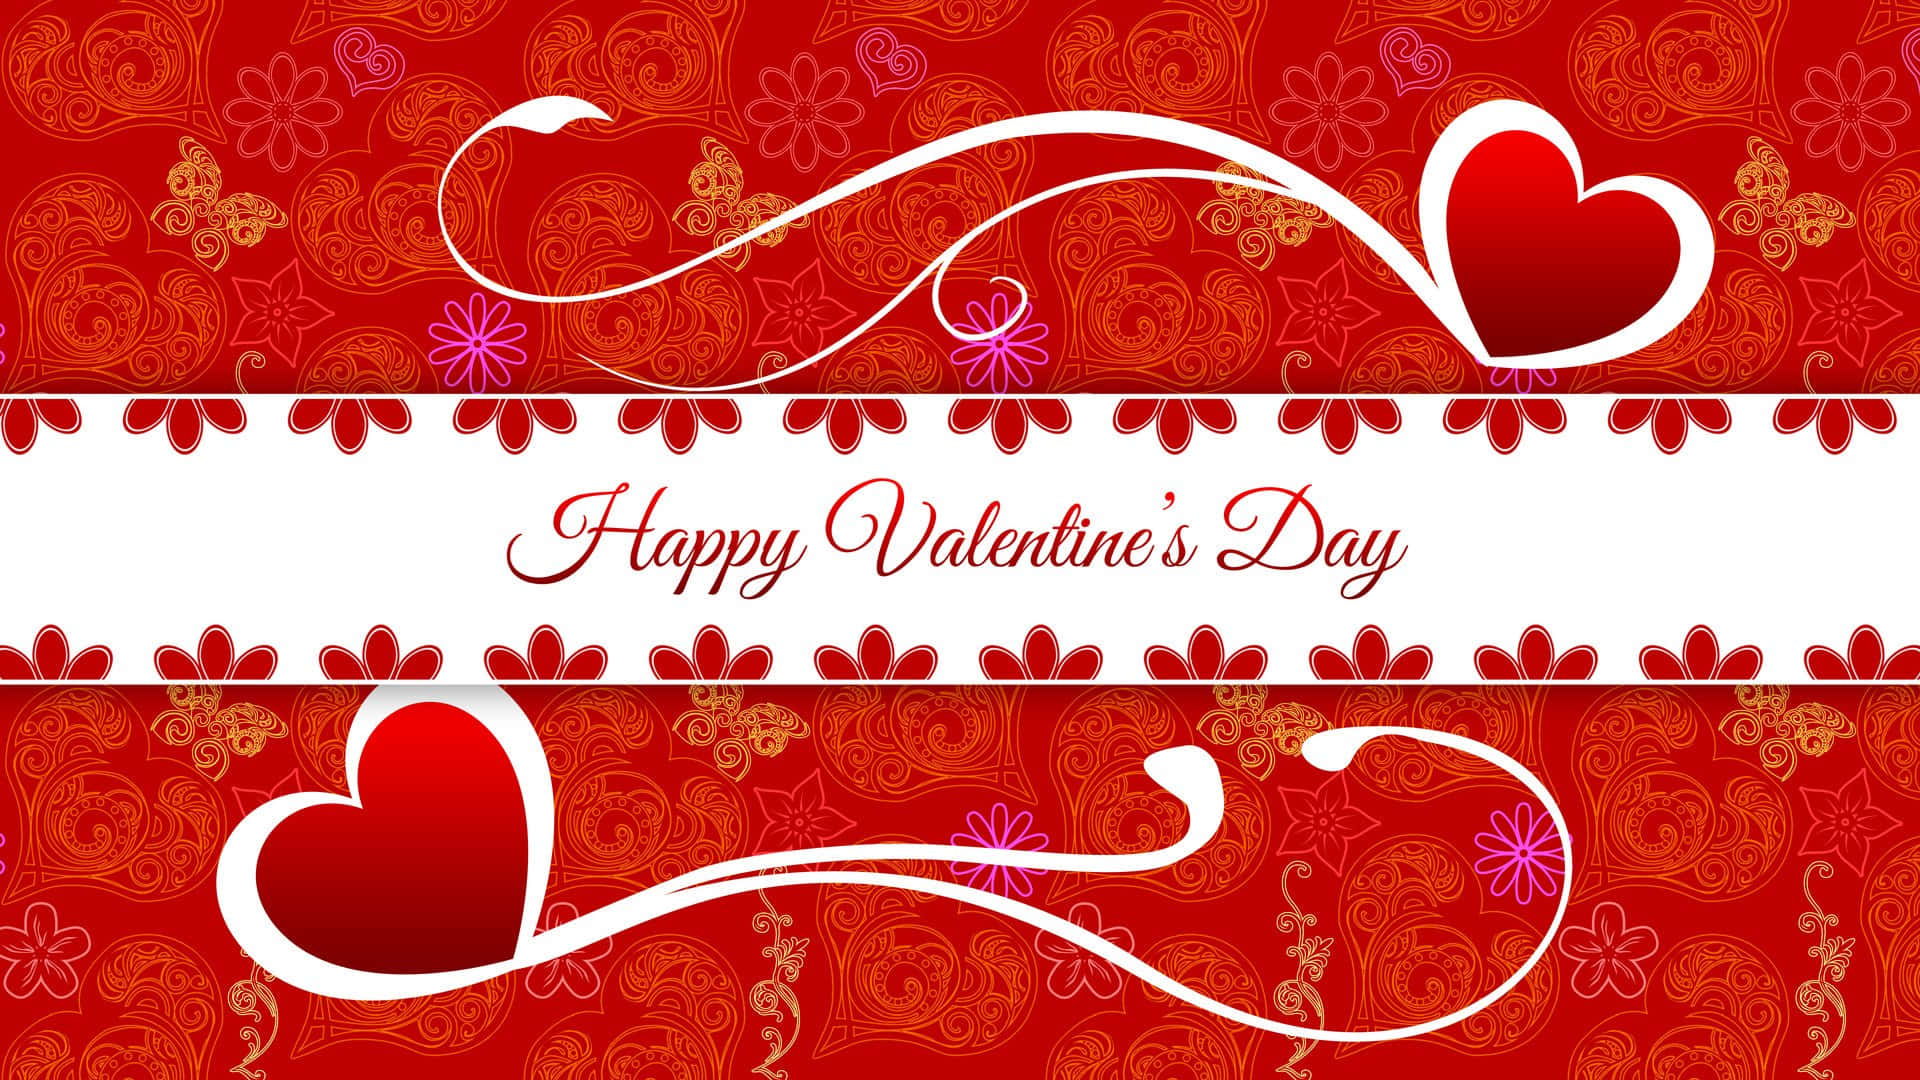 Celebrate love and joy on a happy Valentine's Day